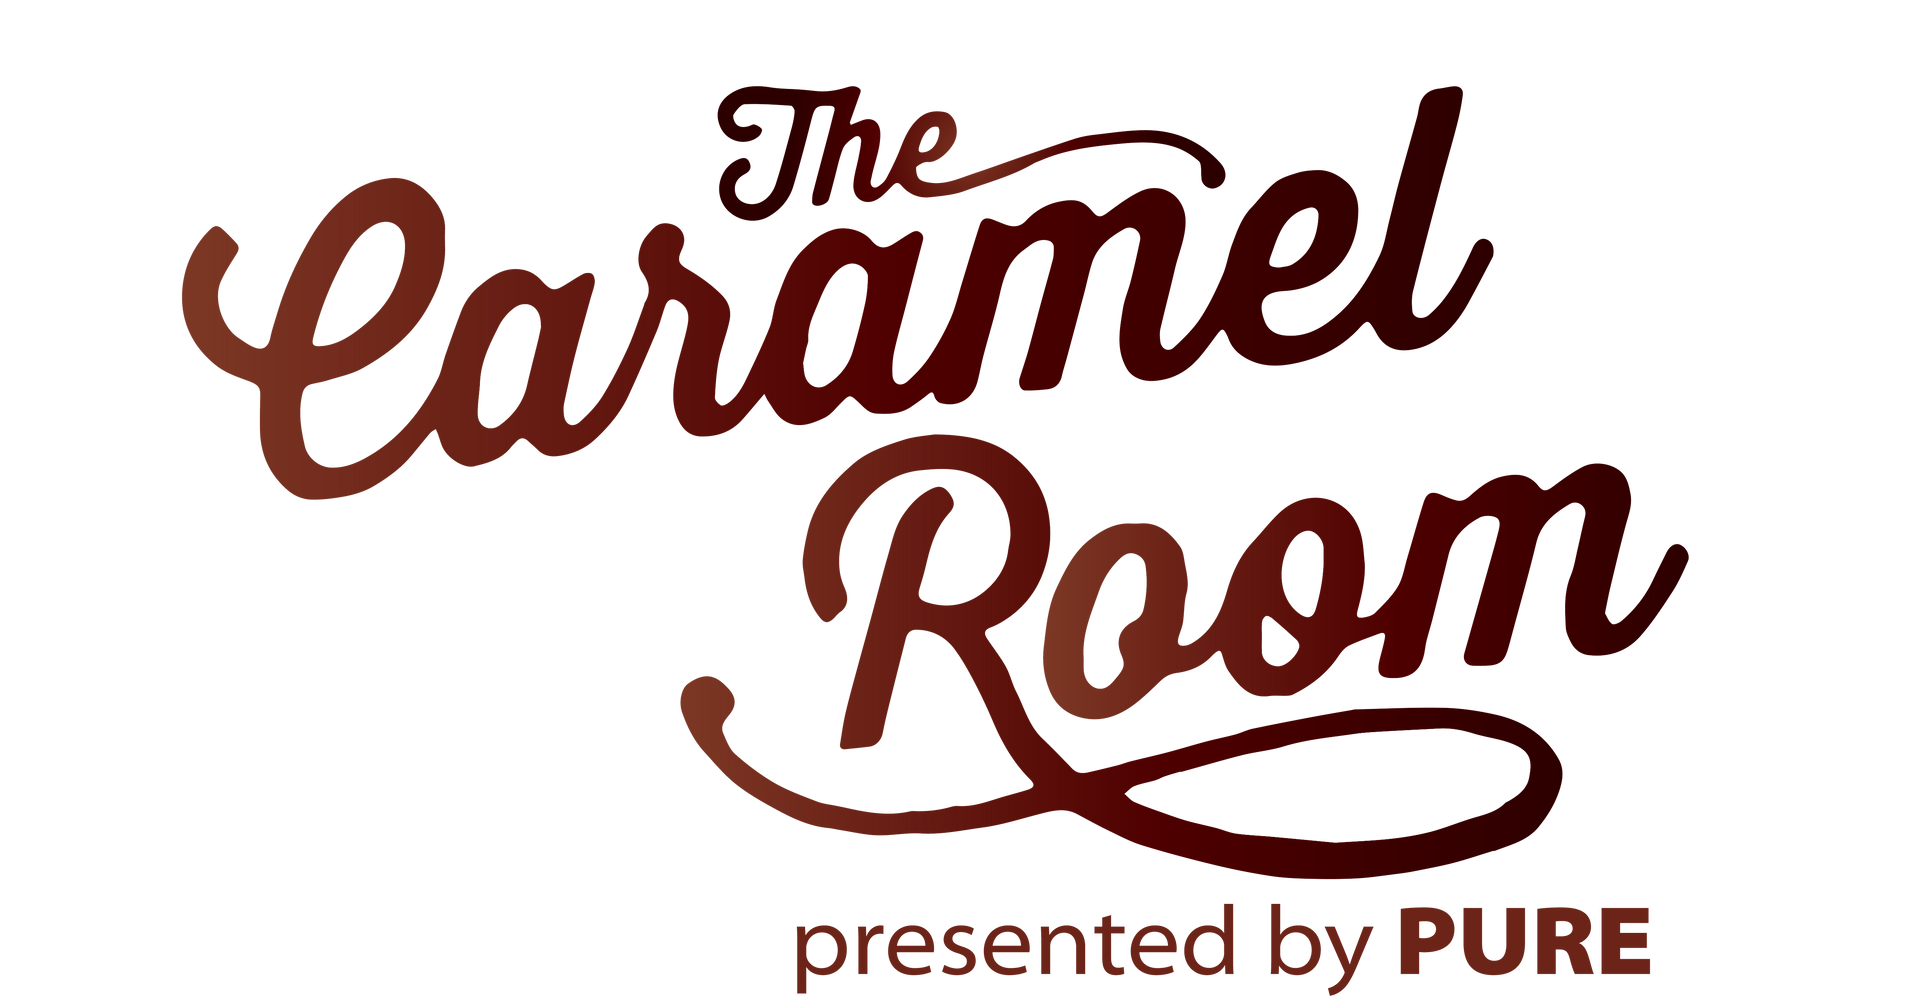 The Caramel Room at Bissinger's, Venue - St. Louis, MO